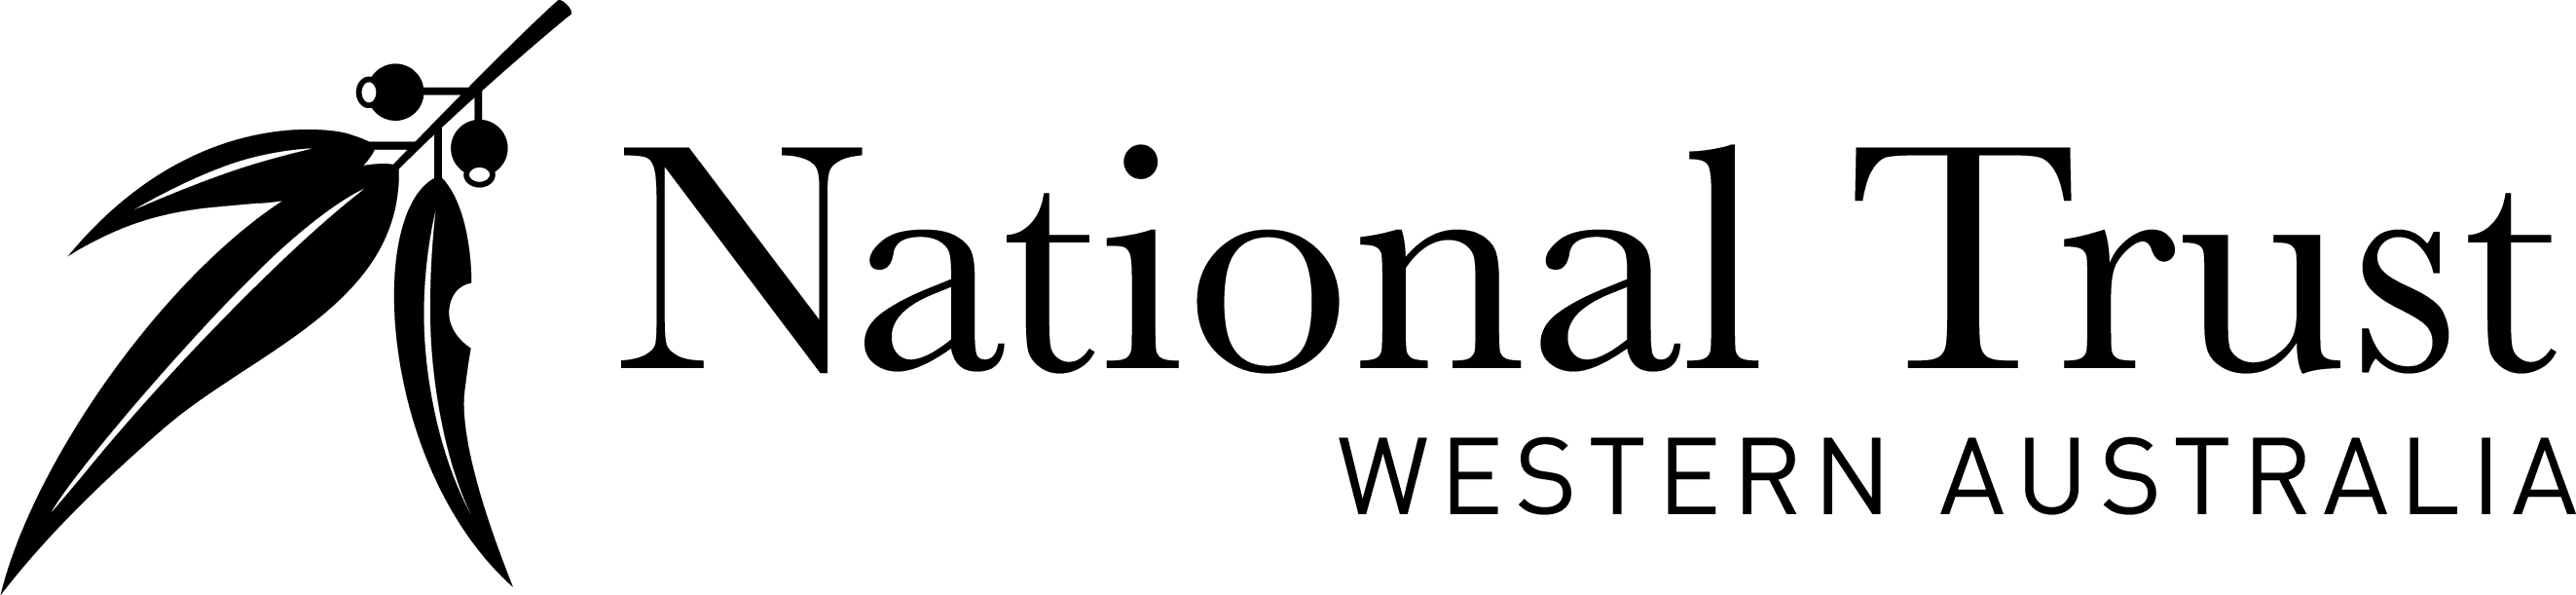 National Trust Western Australia